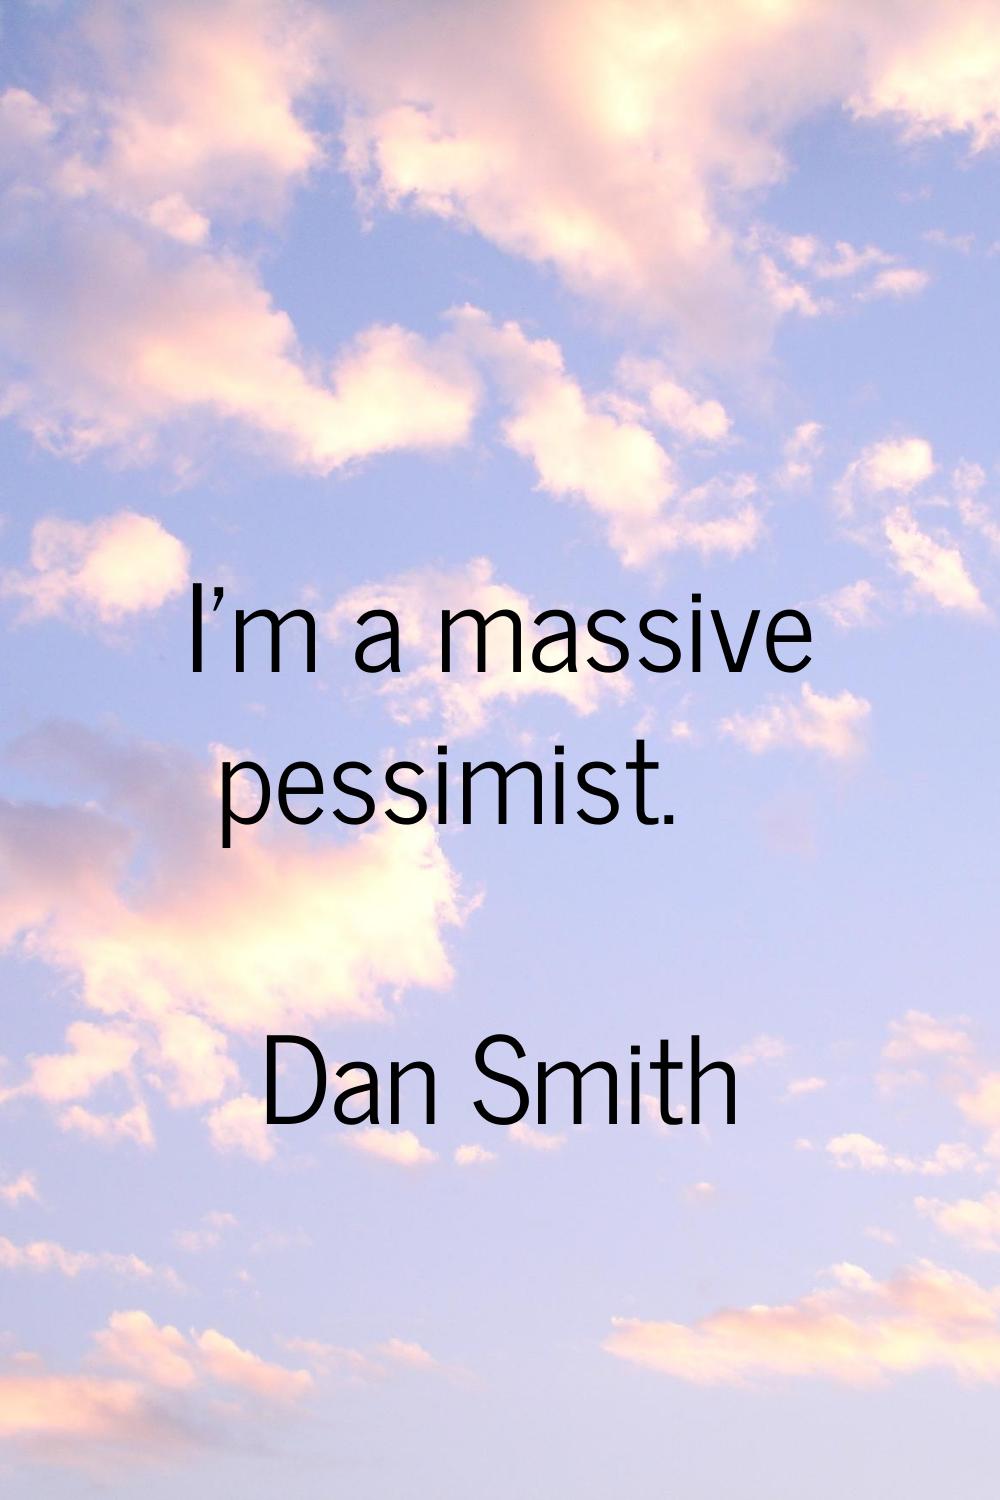 I'm a massive pessimist.